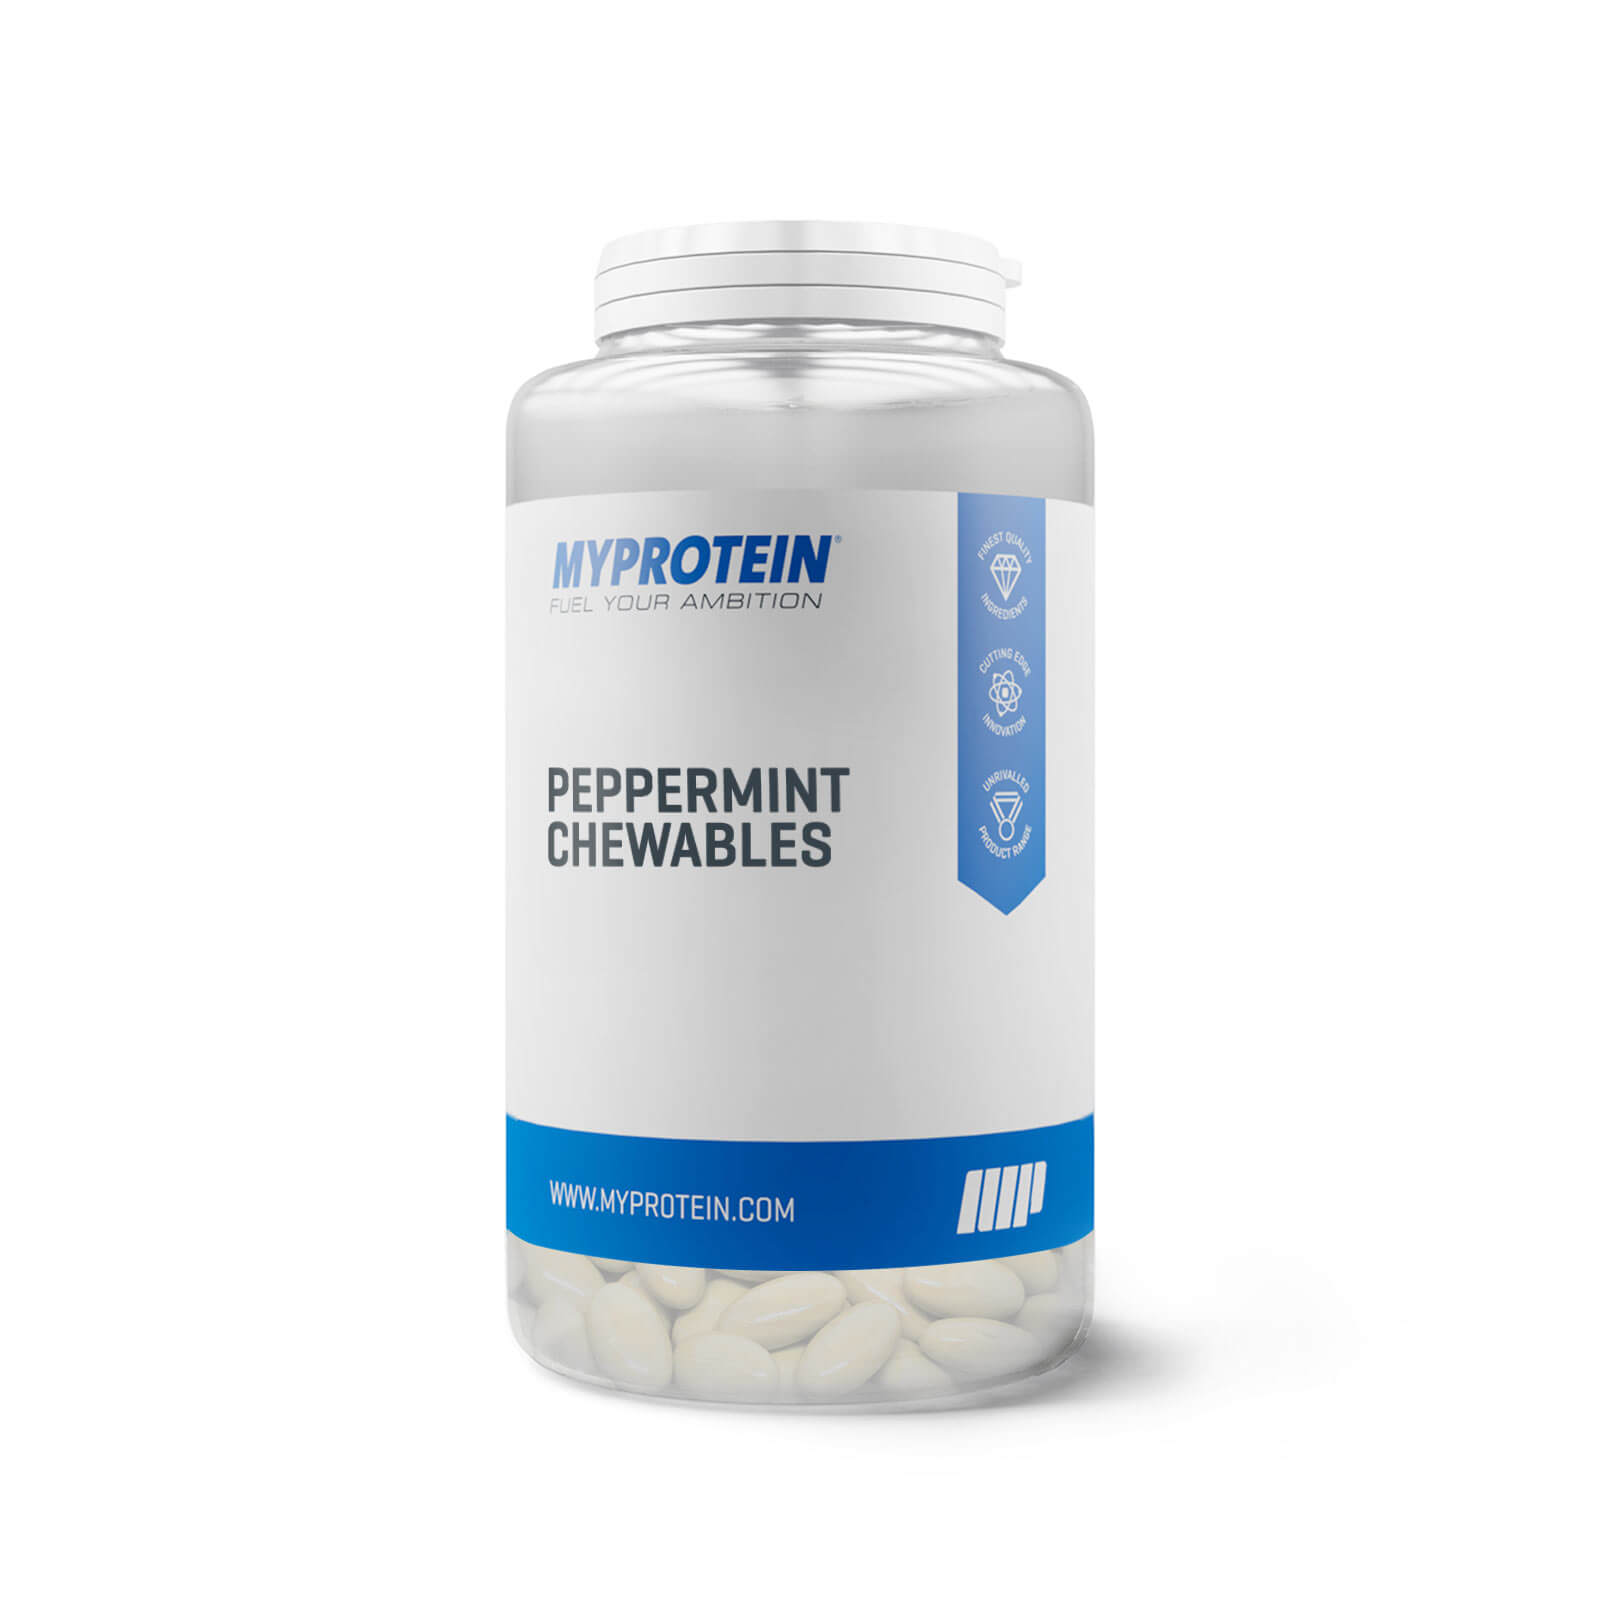 Myprotein Peppermint Chewables